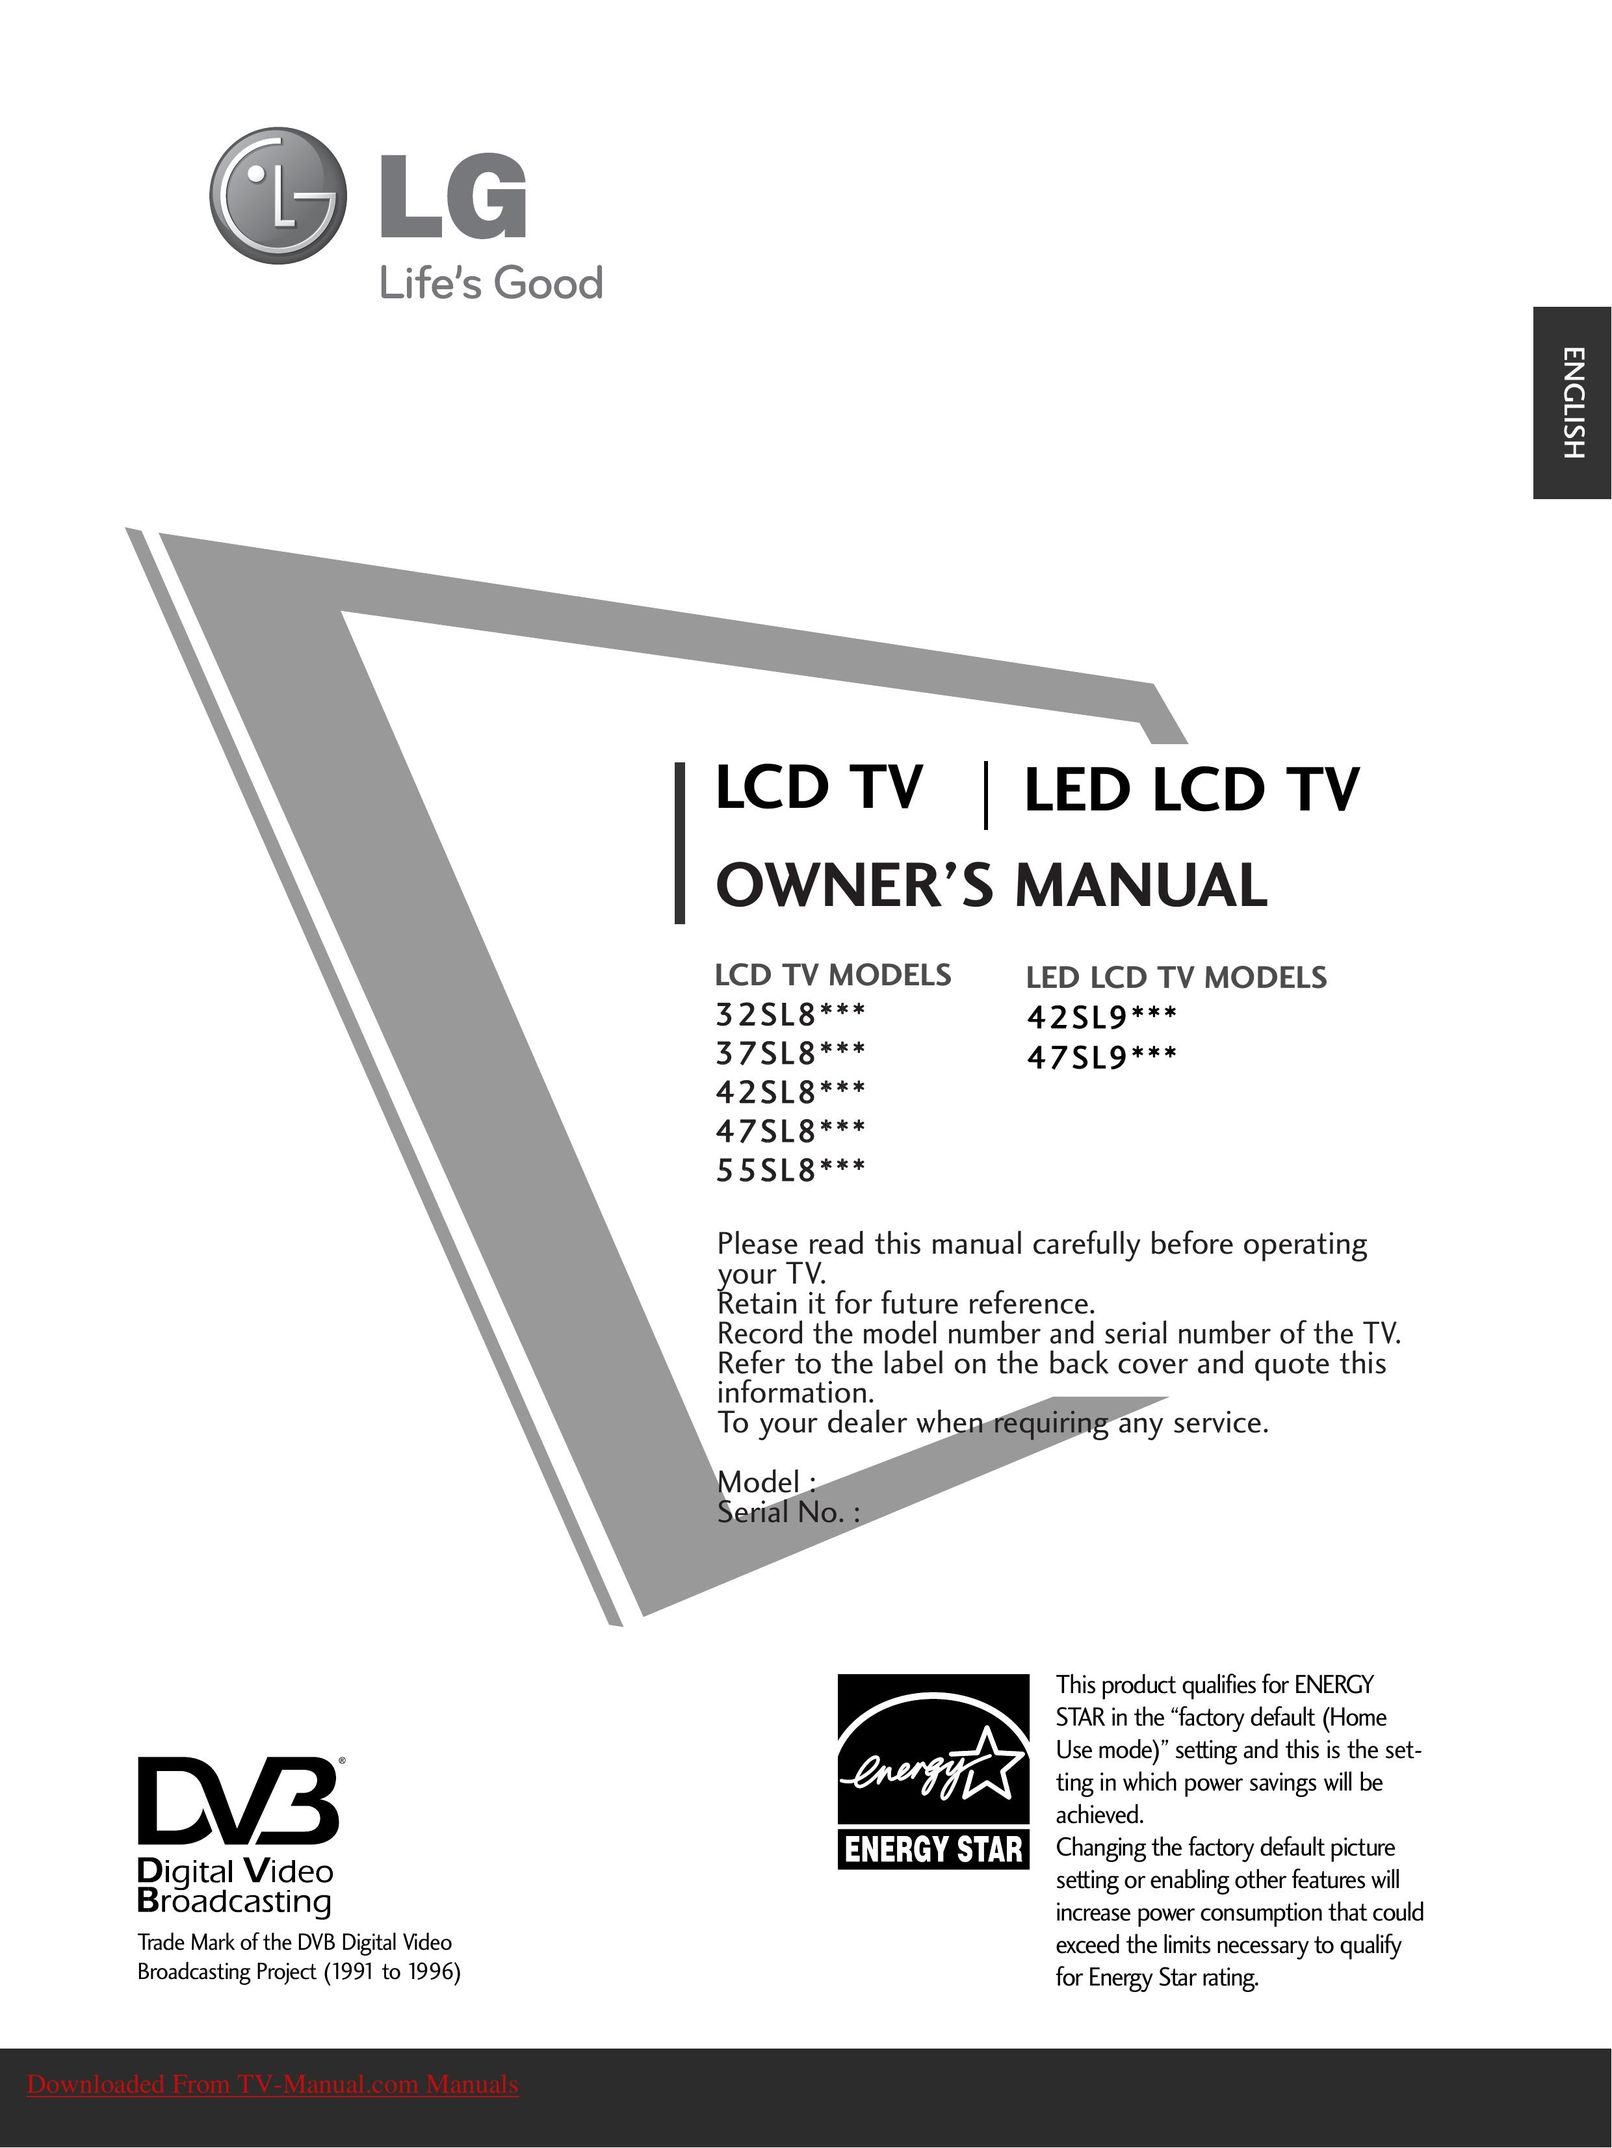 LG Electronics 47S19 Model Vehicle User Manual